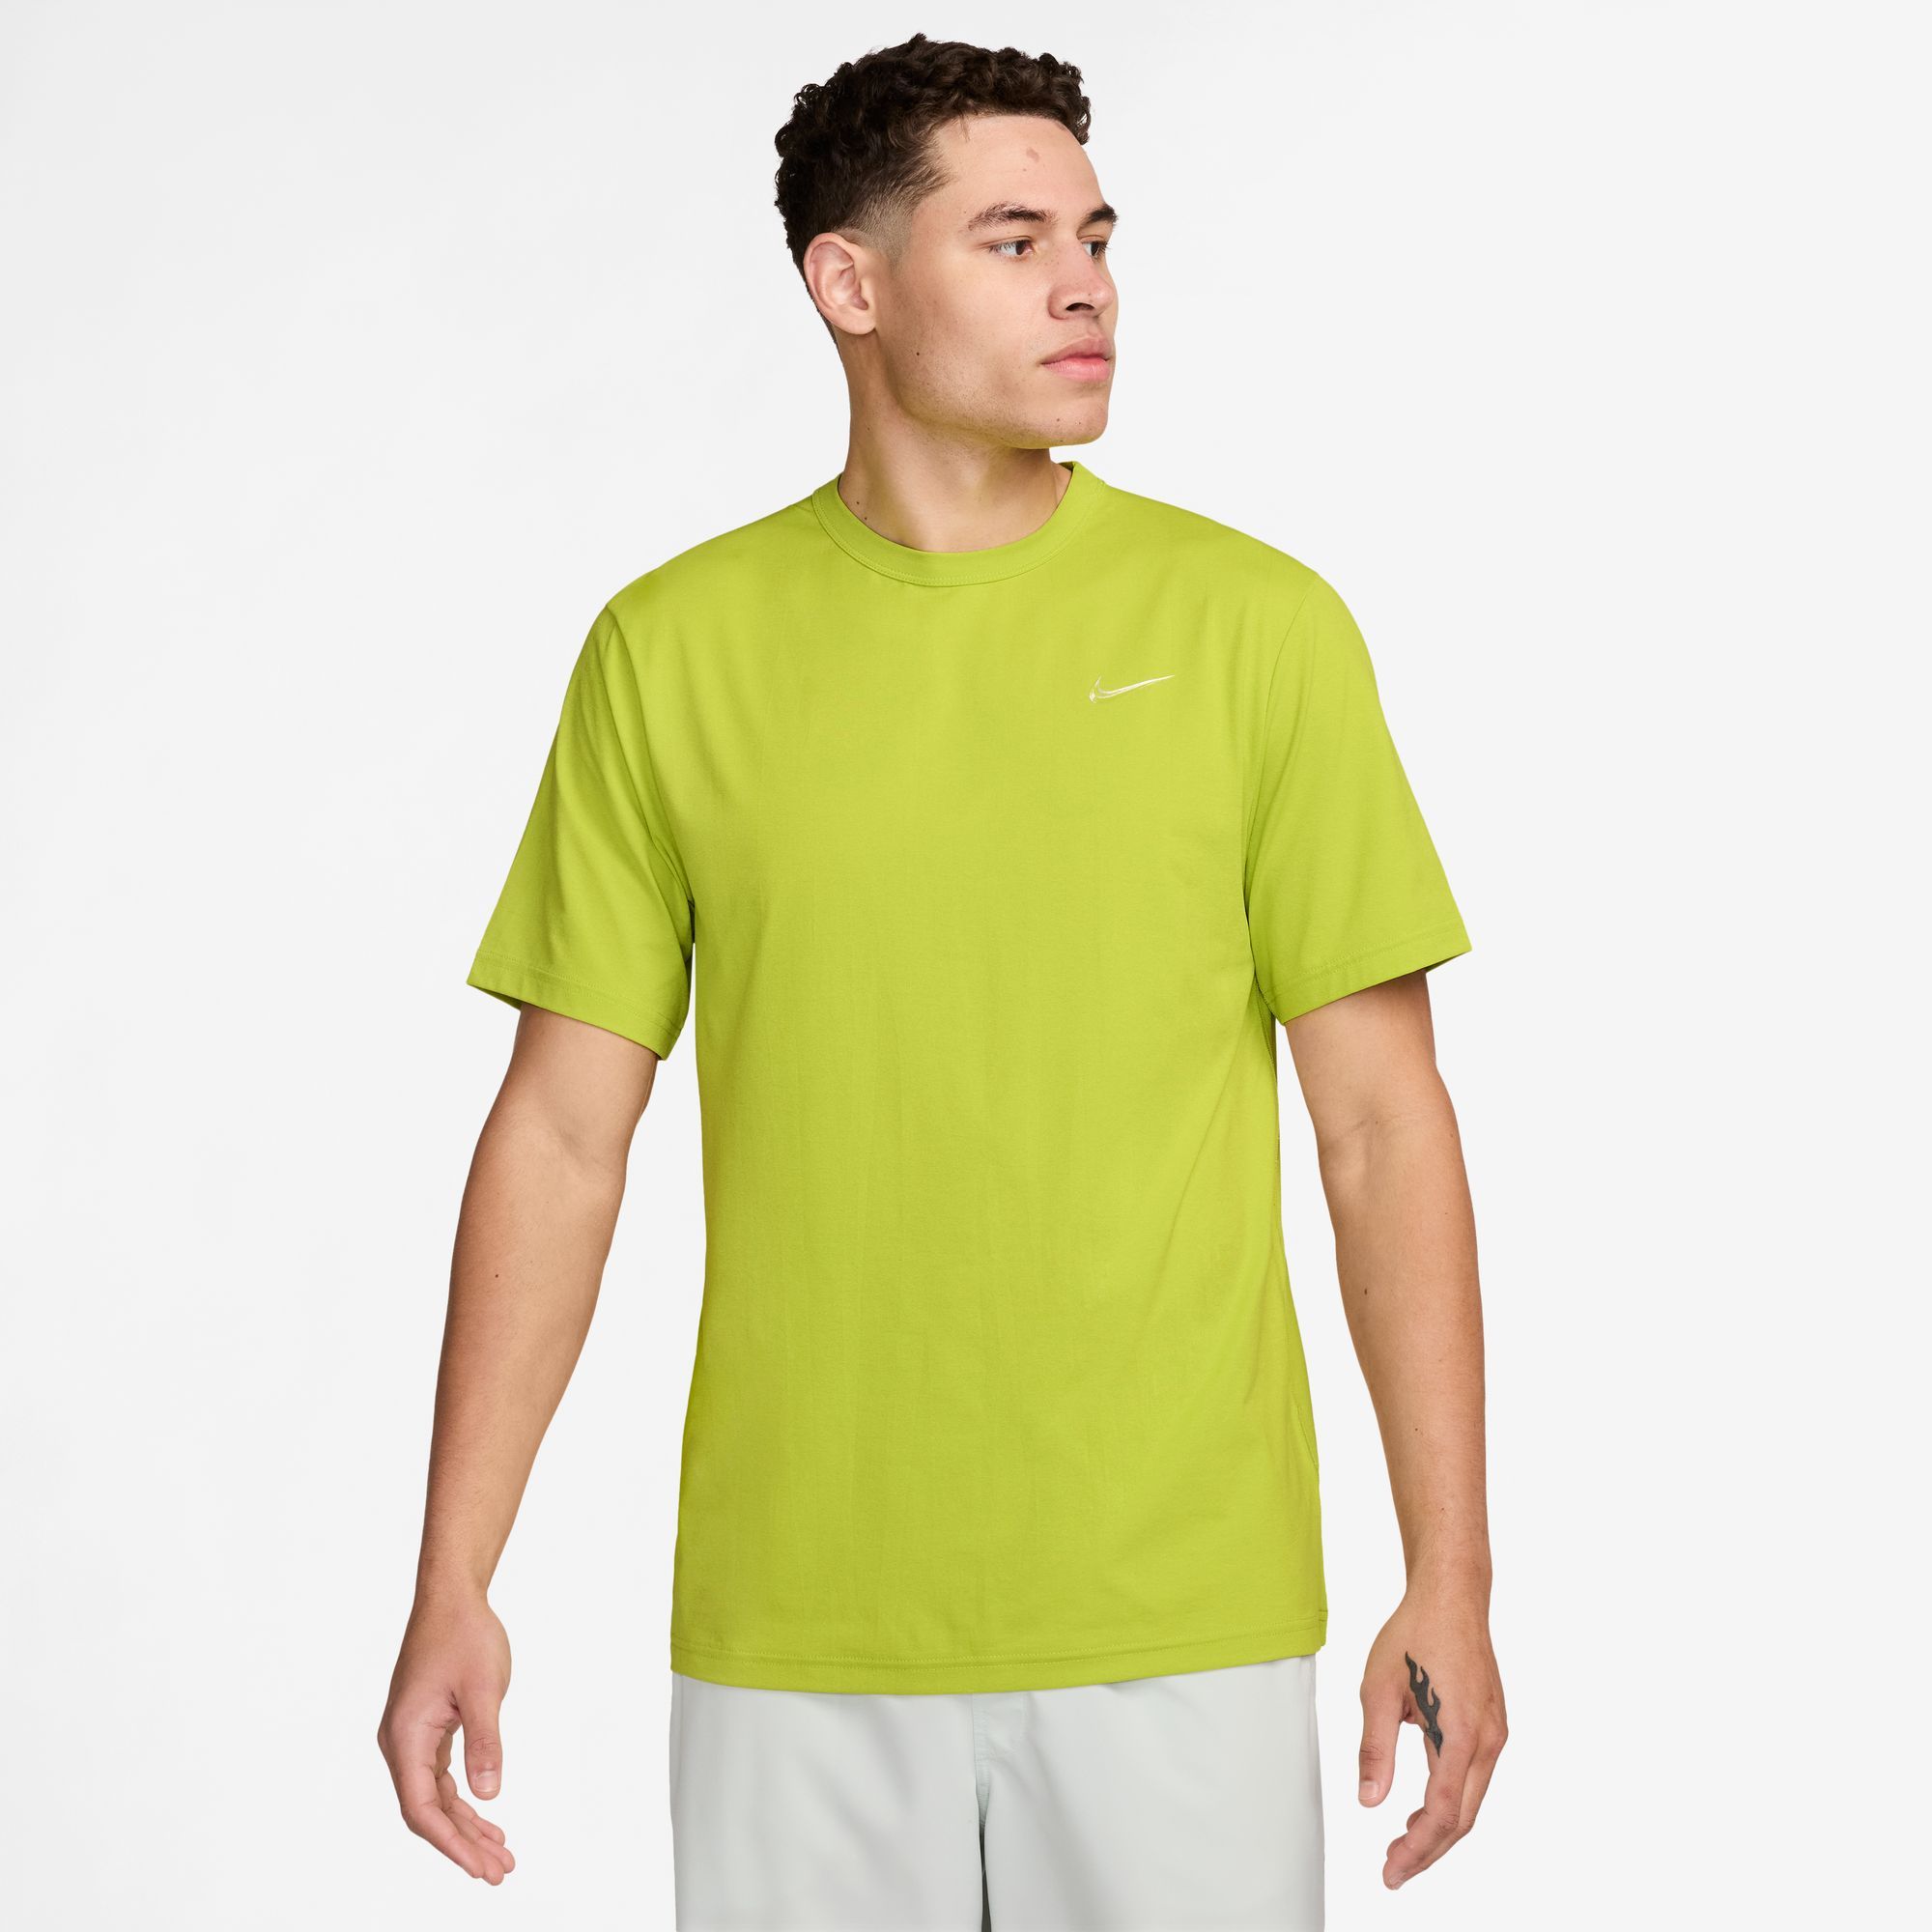 Nike Hyverse Men's Dri-FIT Short-Sleeve Fitness Top